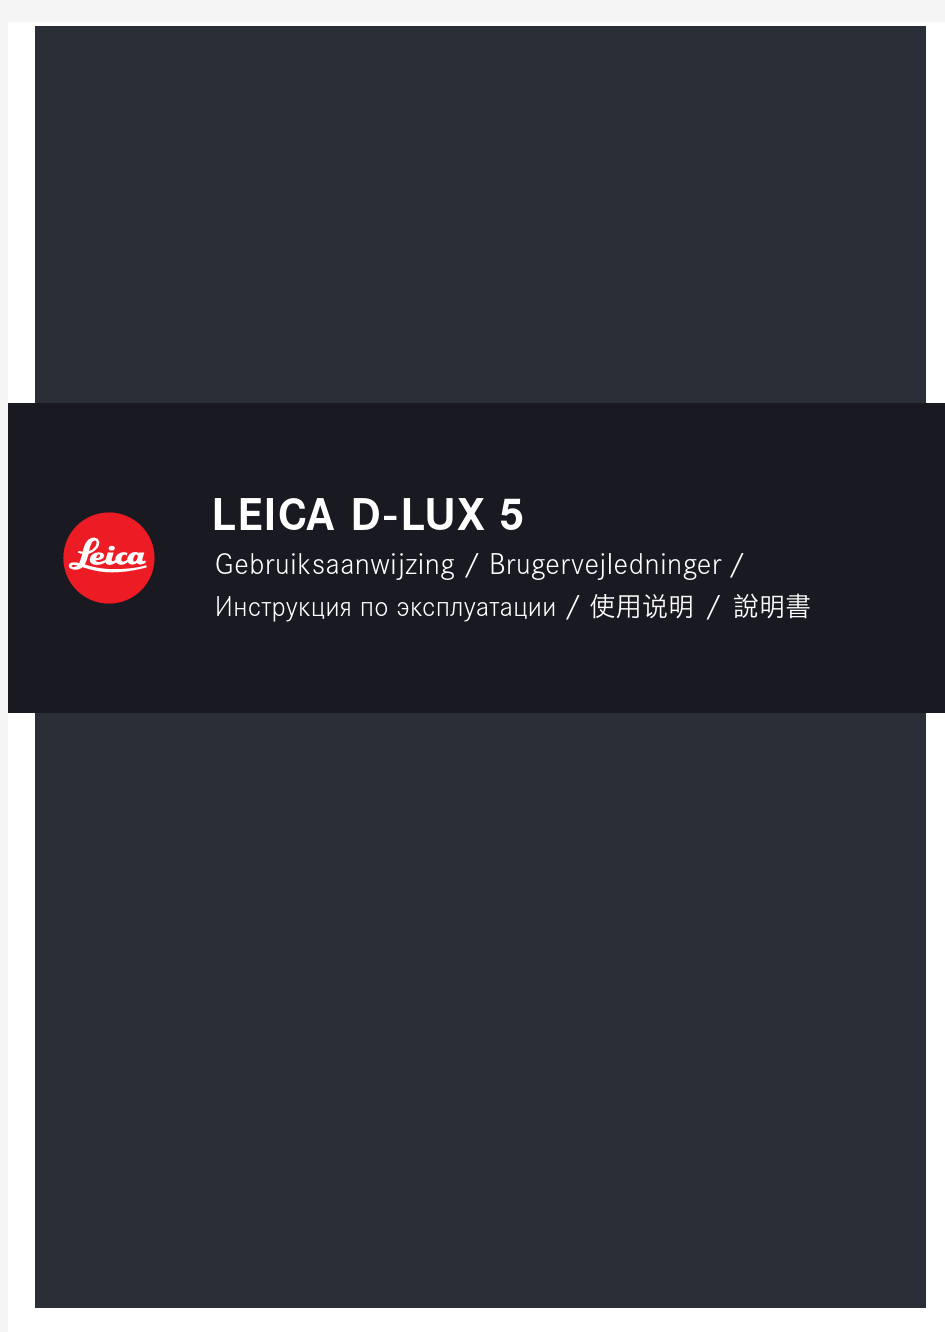 Leica莱卡数码相机 D-LUX 5 使用说明书(全)